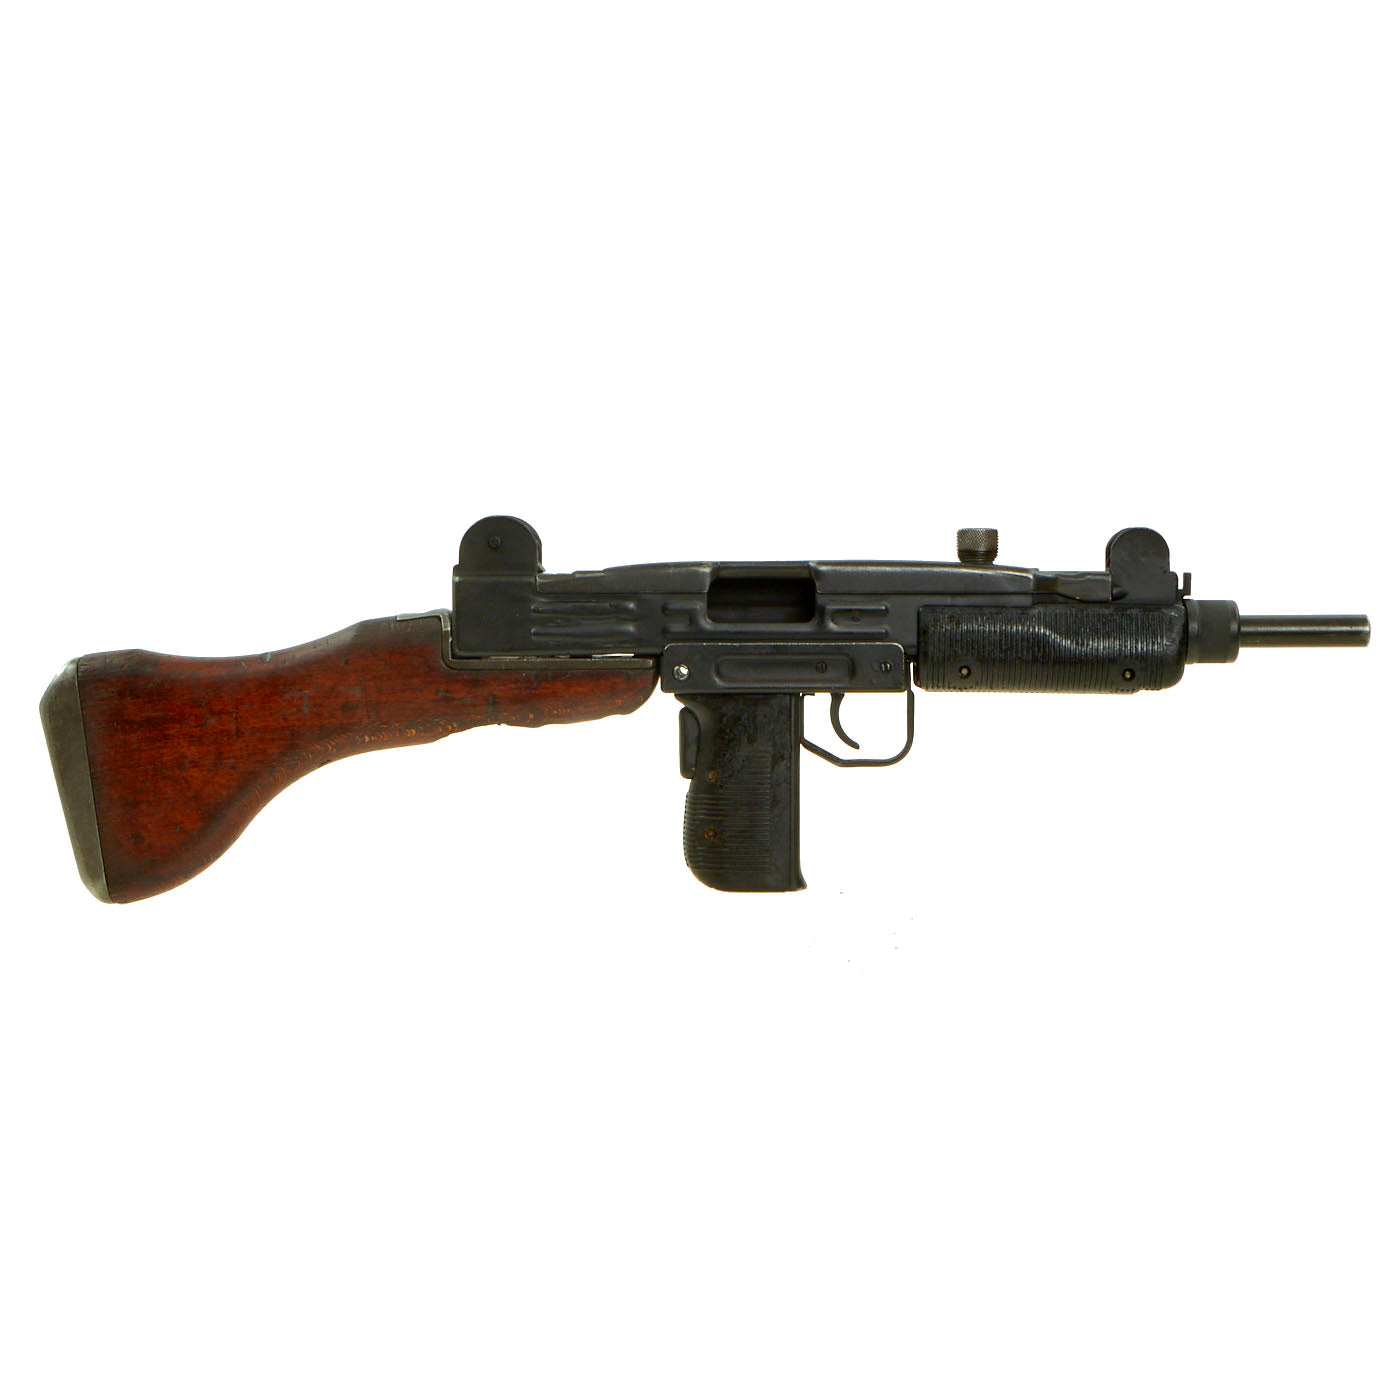 Original Israeli Six-Day War UZI Display Submachine Gun with Wood